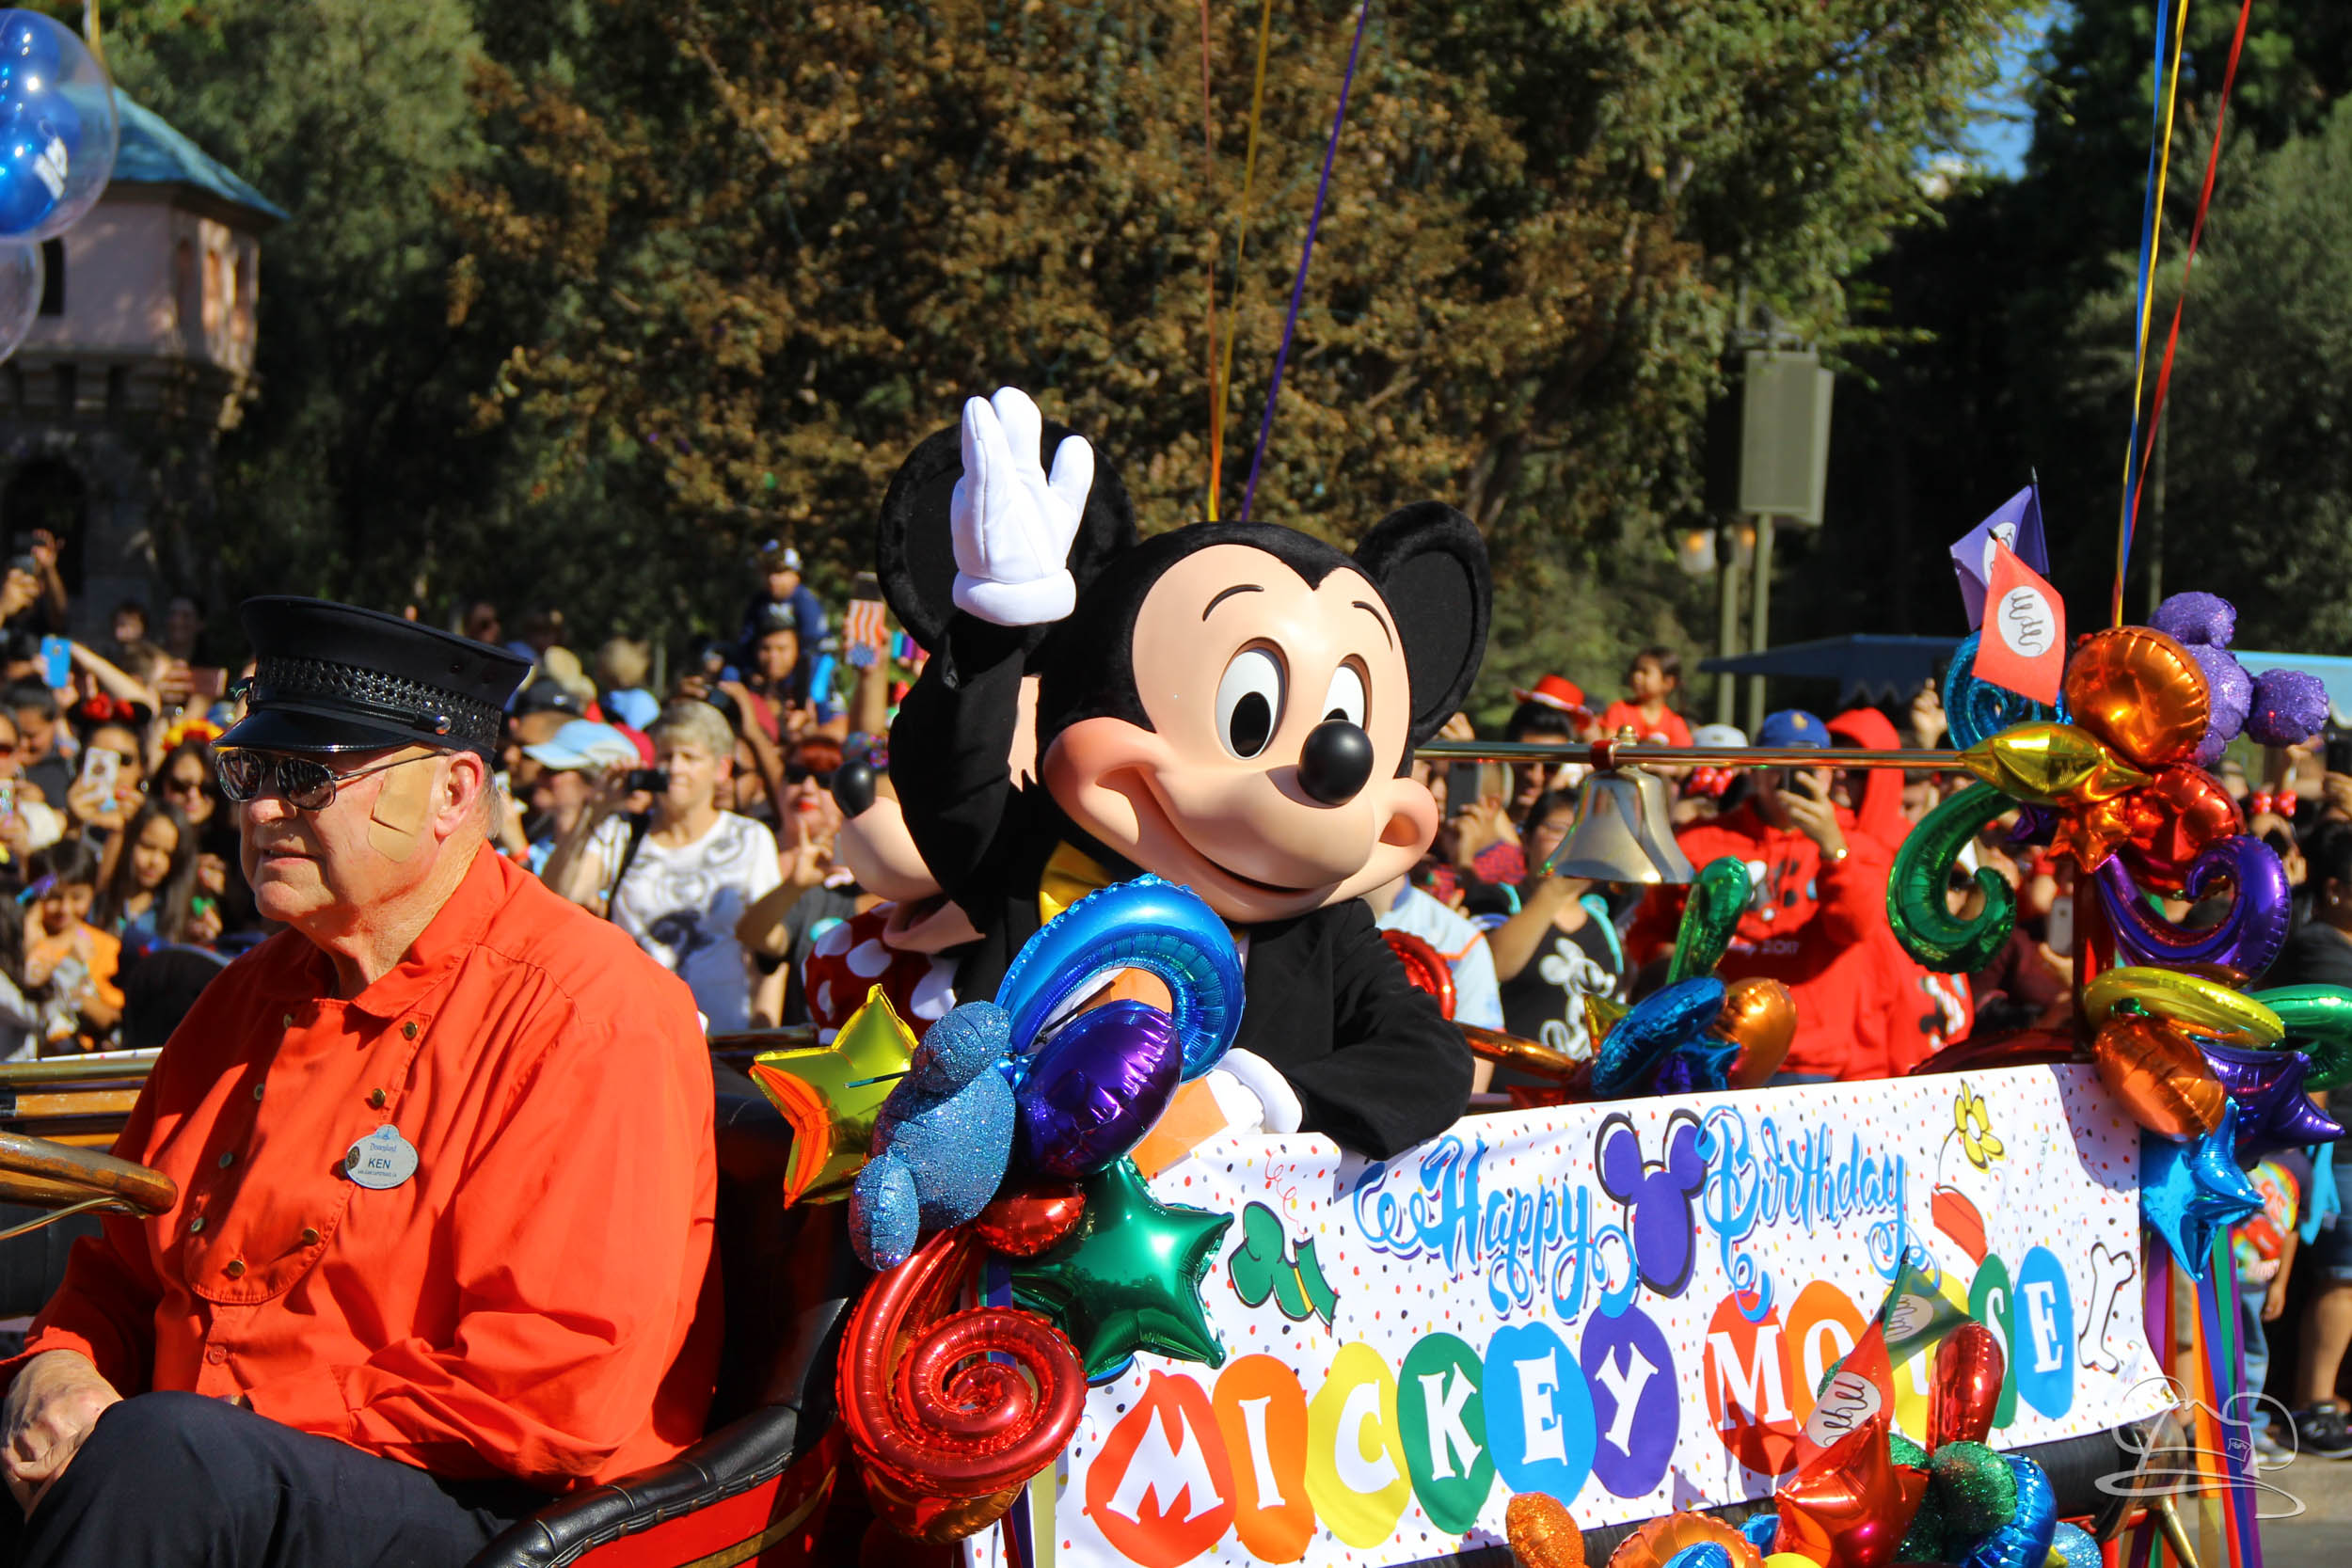 Disneyland Cavalcade Kicks Mickey Mouse 90th Celebration into 2019